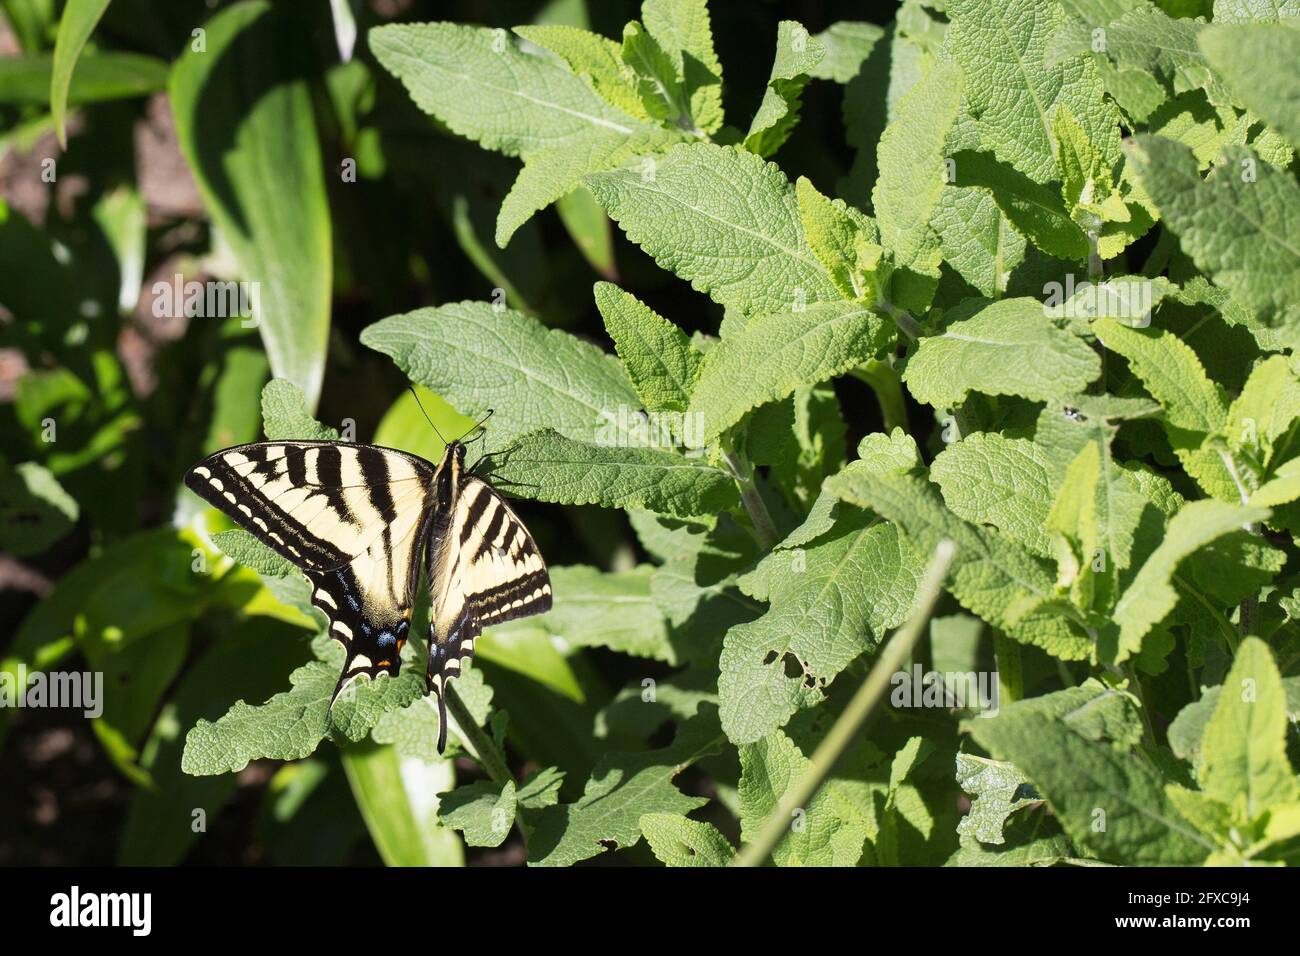 Papilio machaon - common yellow swallowtail butterfly. Stock Photo